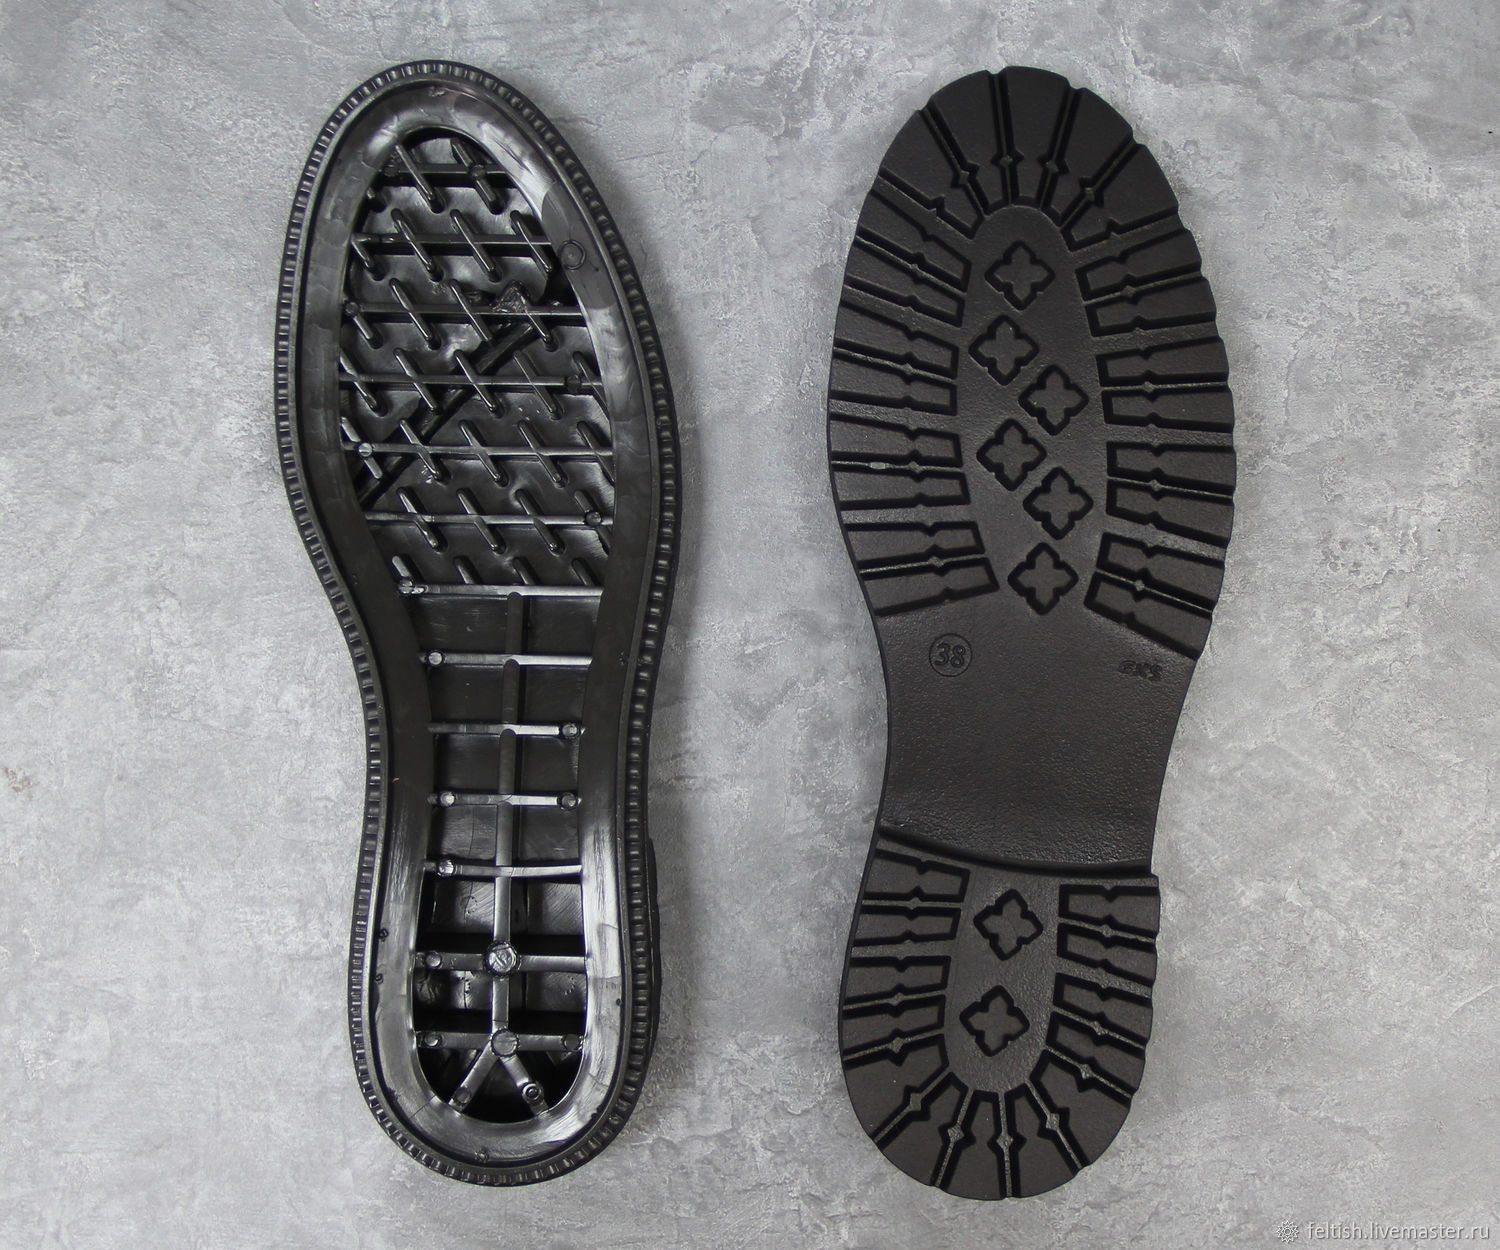 Ремонт подошвы обуви цена sneaknfresh ru. Подошва для обуви. Подметка обуви. Форма подошвы обуви. Материал для изготовления подошвы обуви.